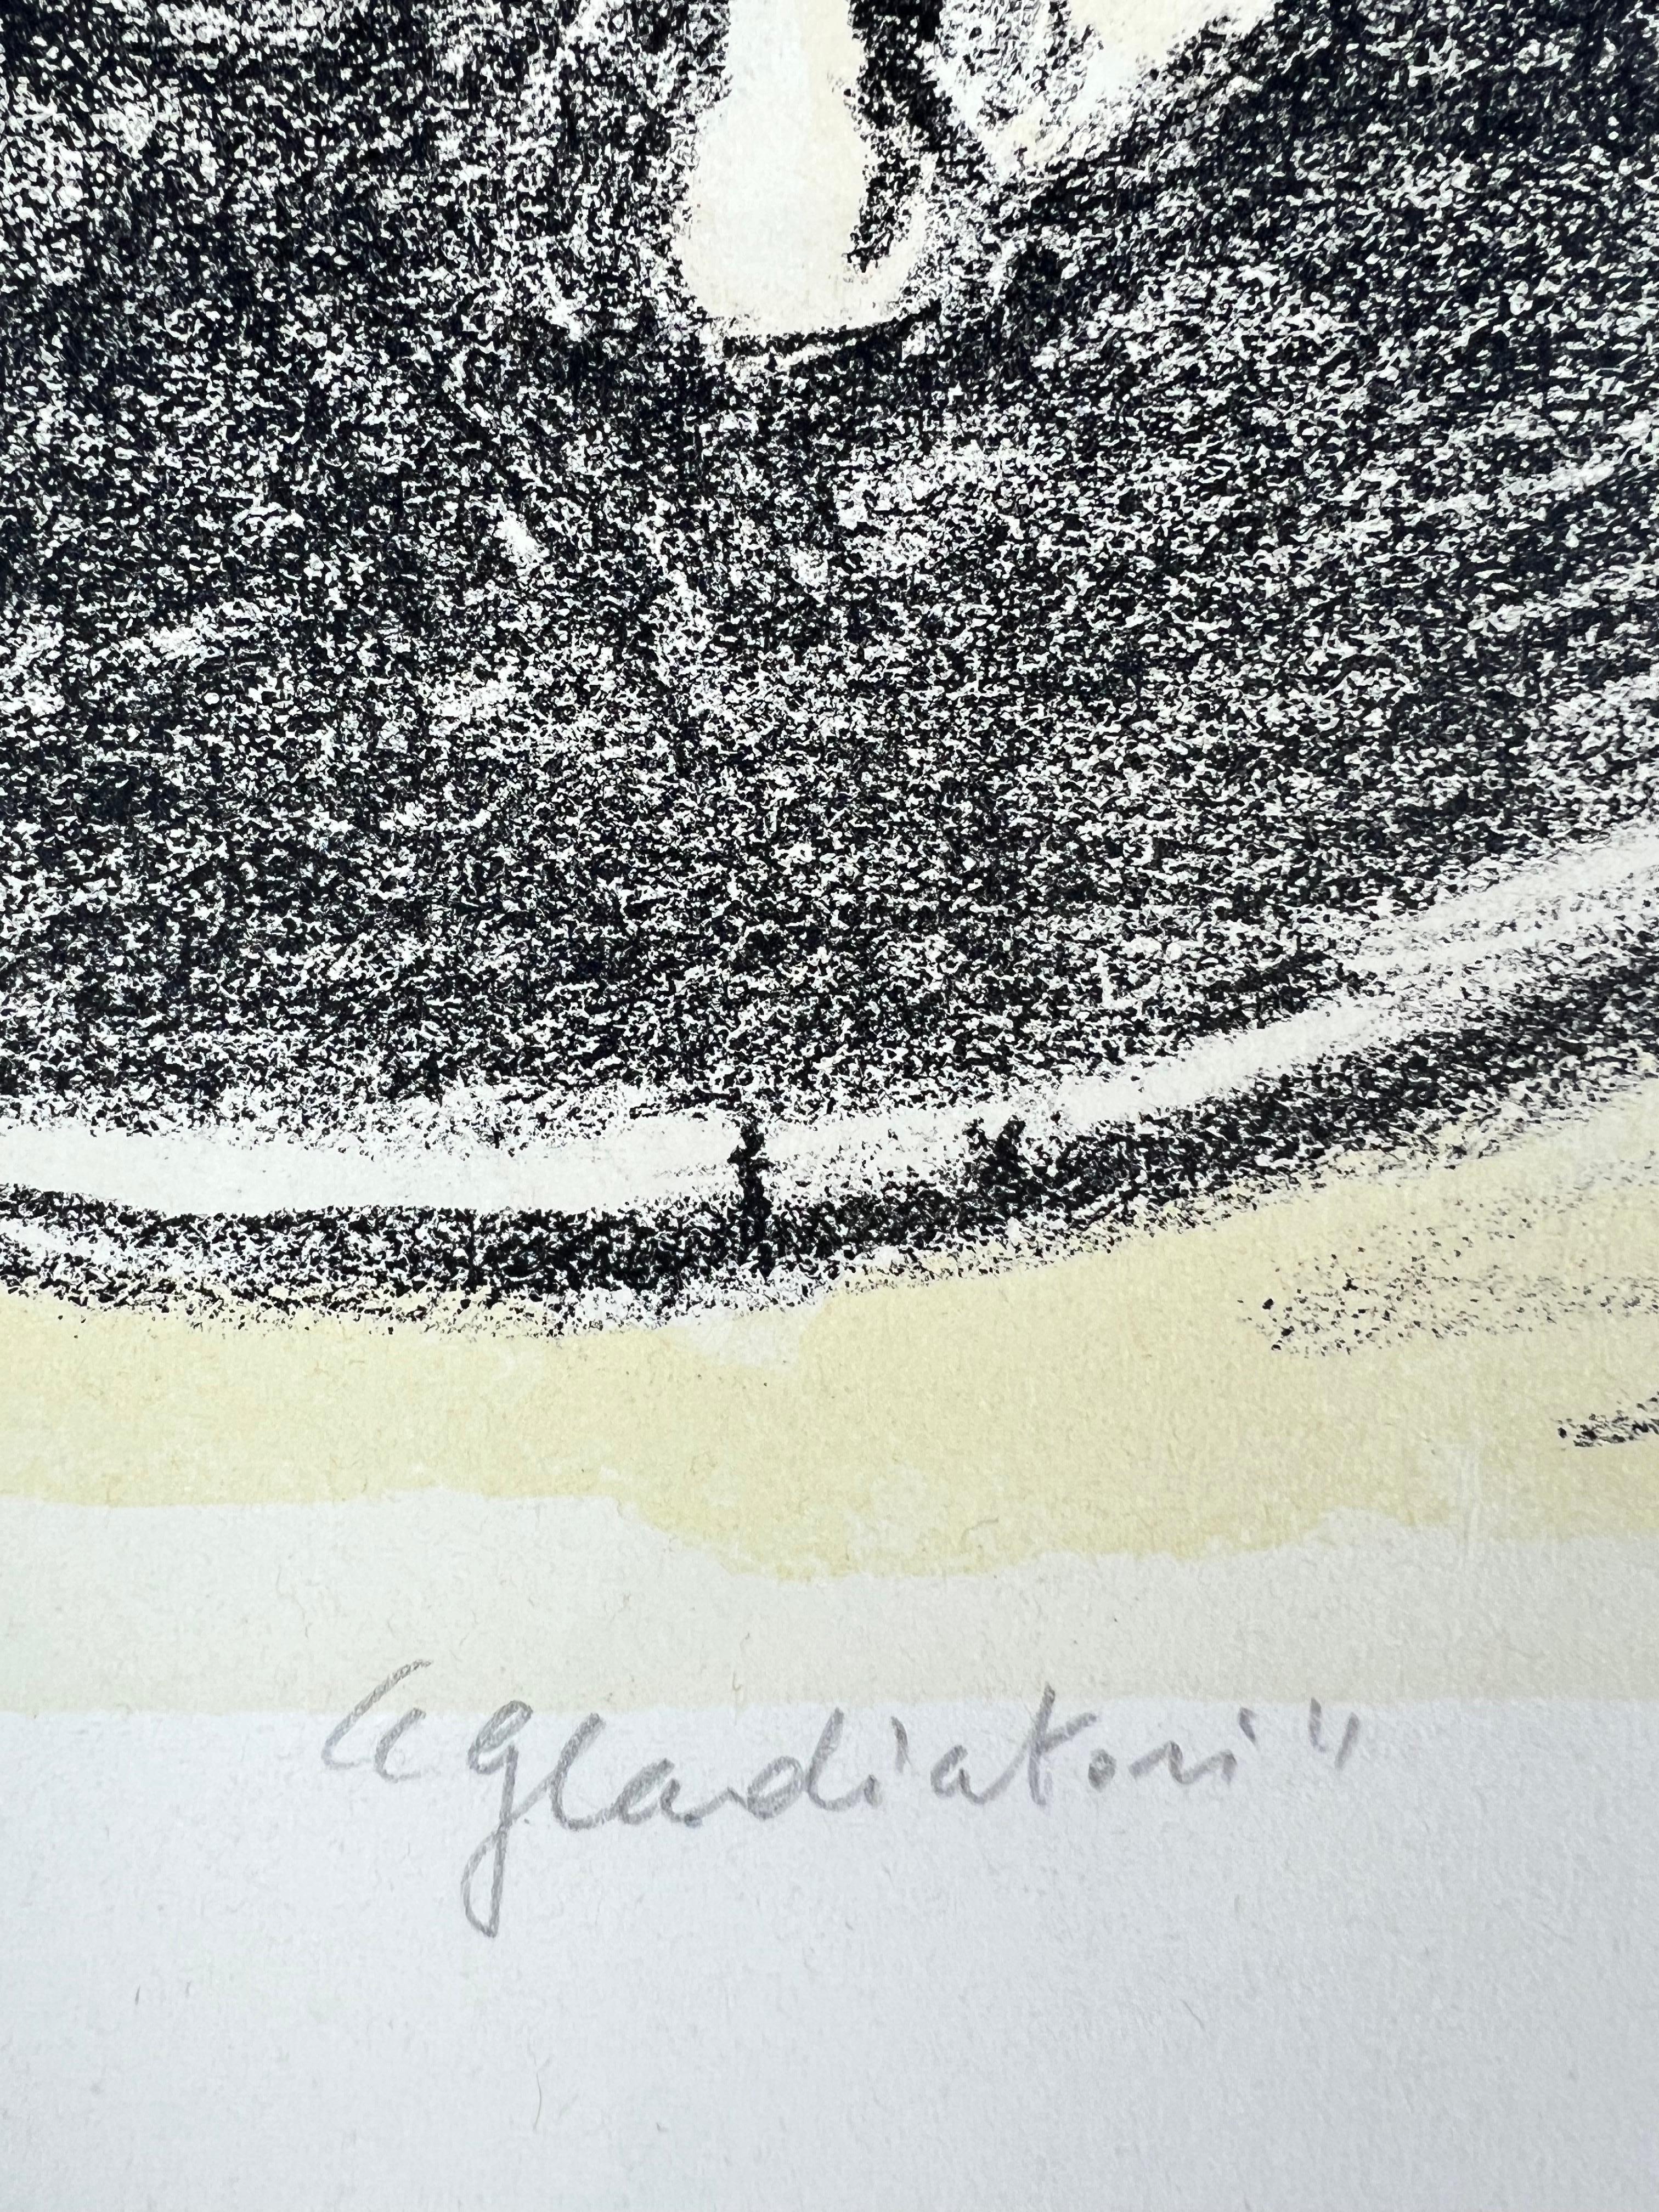 Giorgio De Chirico ( 1888 – 1978 ) – Gladiatori – hand-signed lithograph – 1969 4